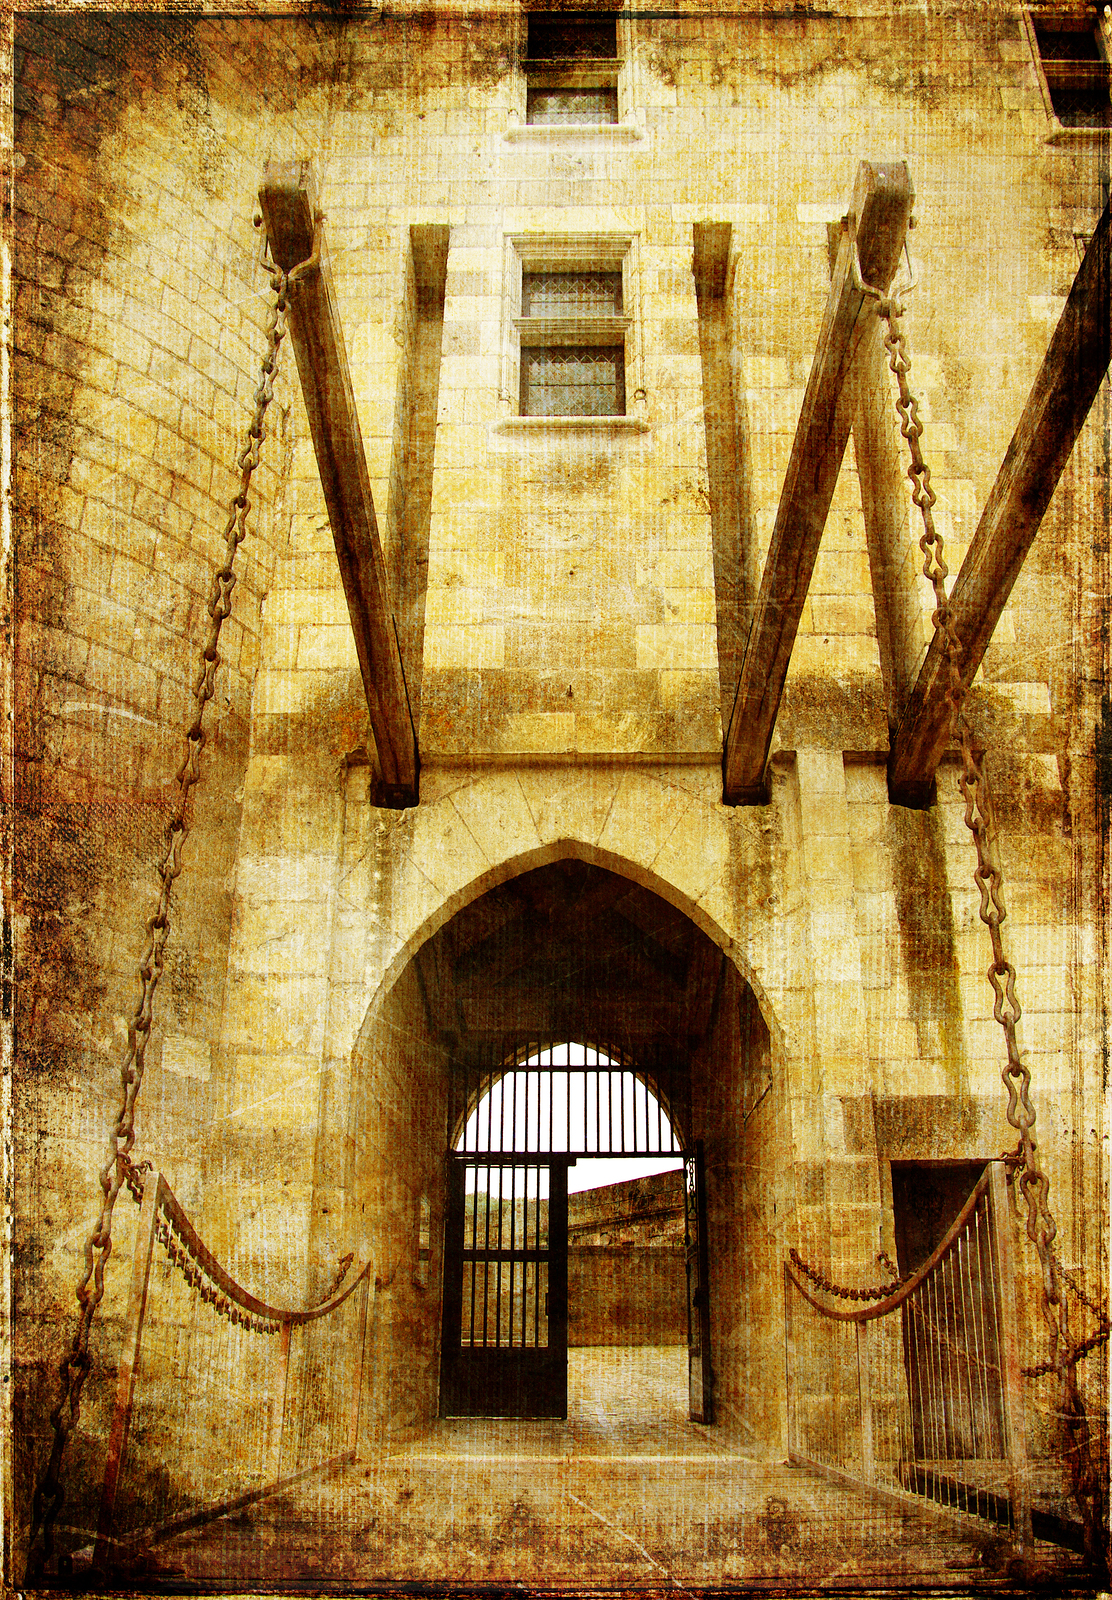 castle' entrance gate - picture in retro style